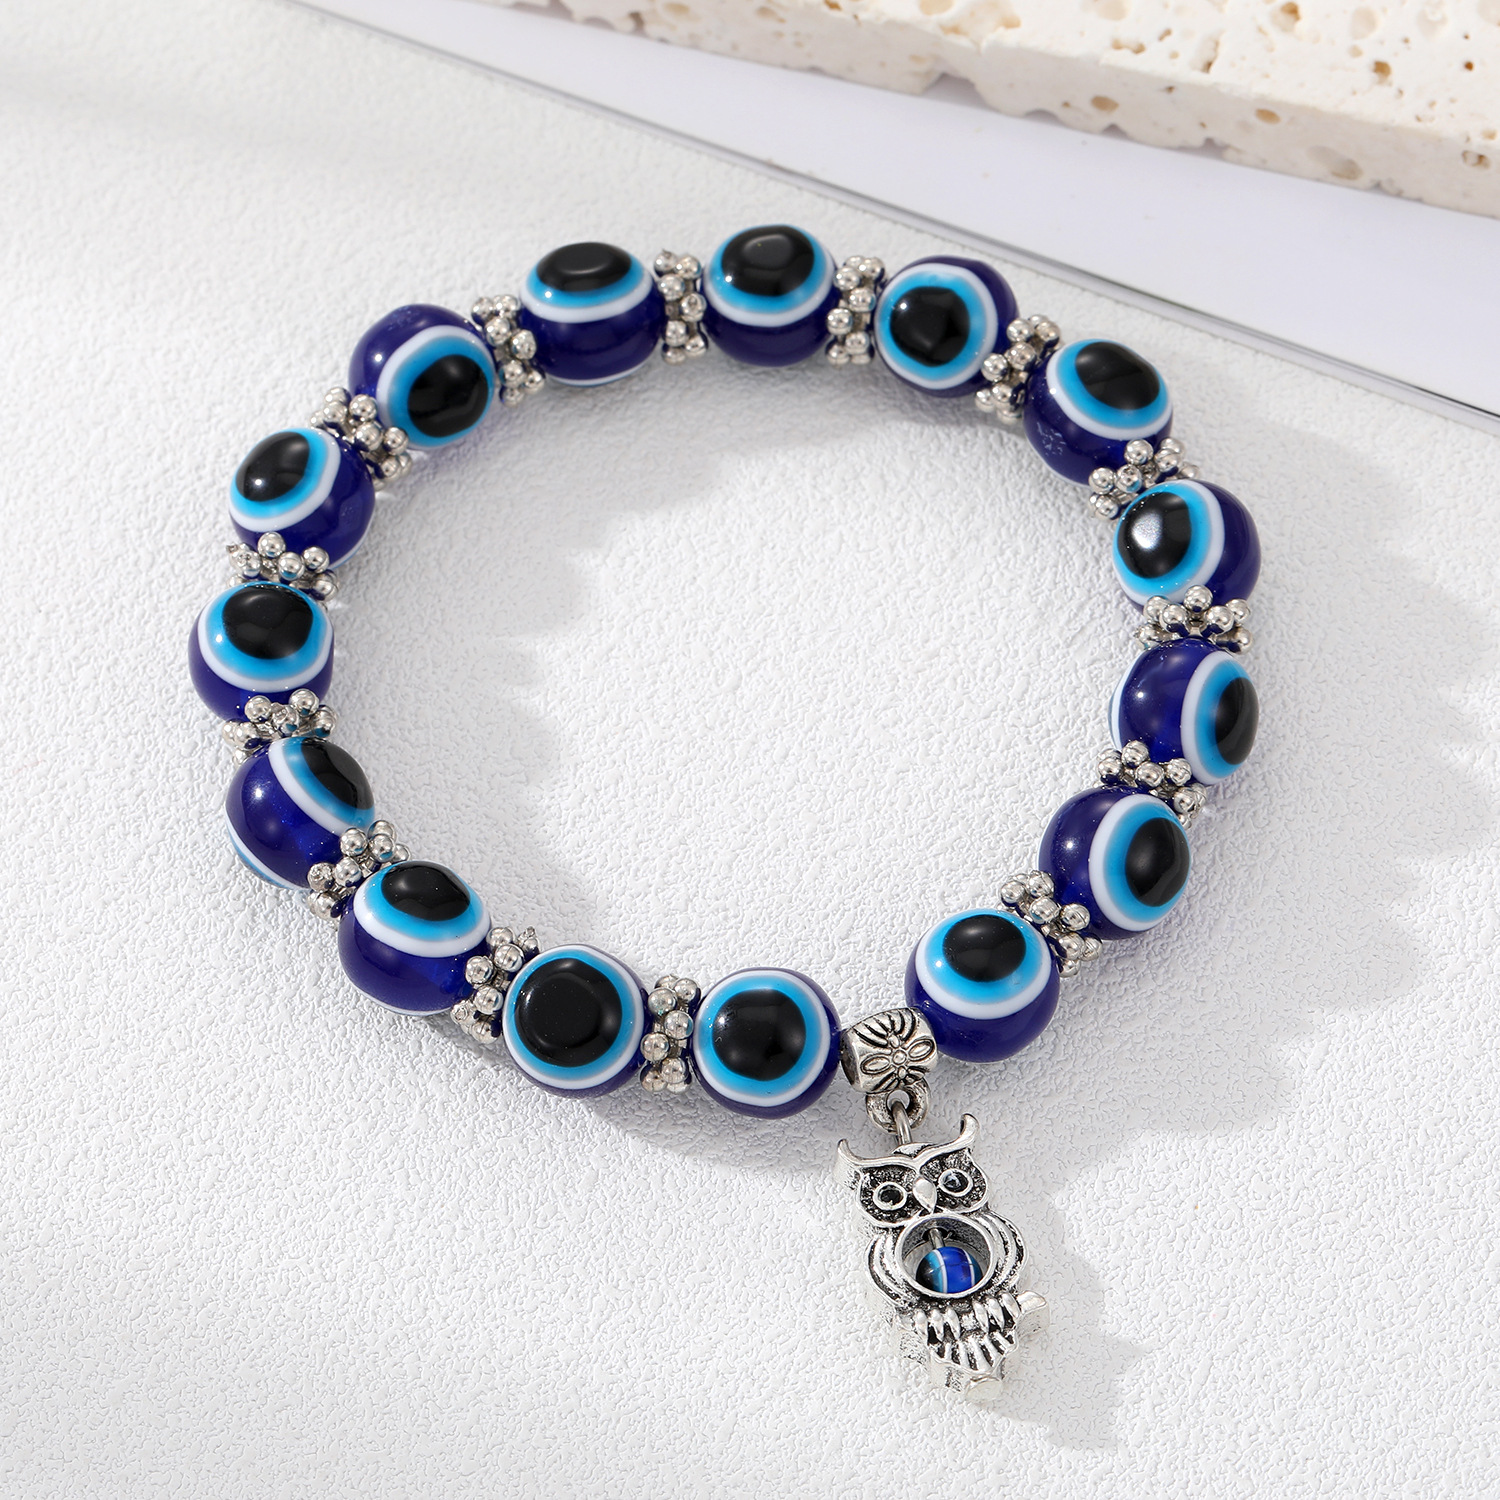 4:Large blue beaded owl bracelet